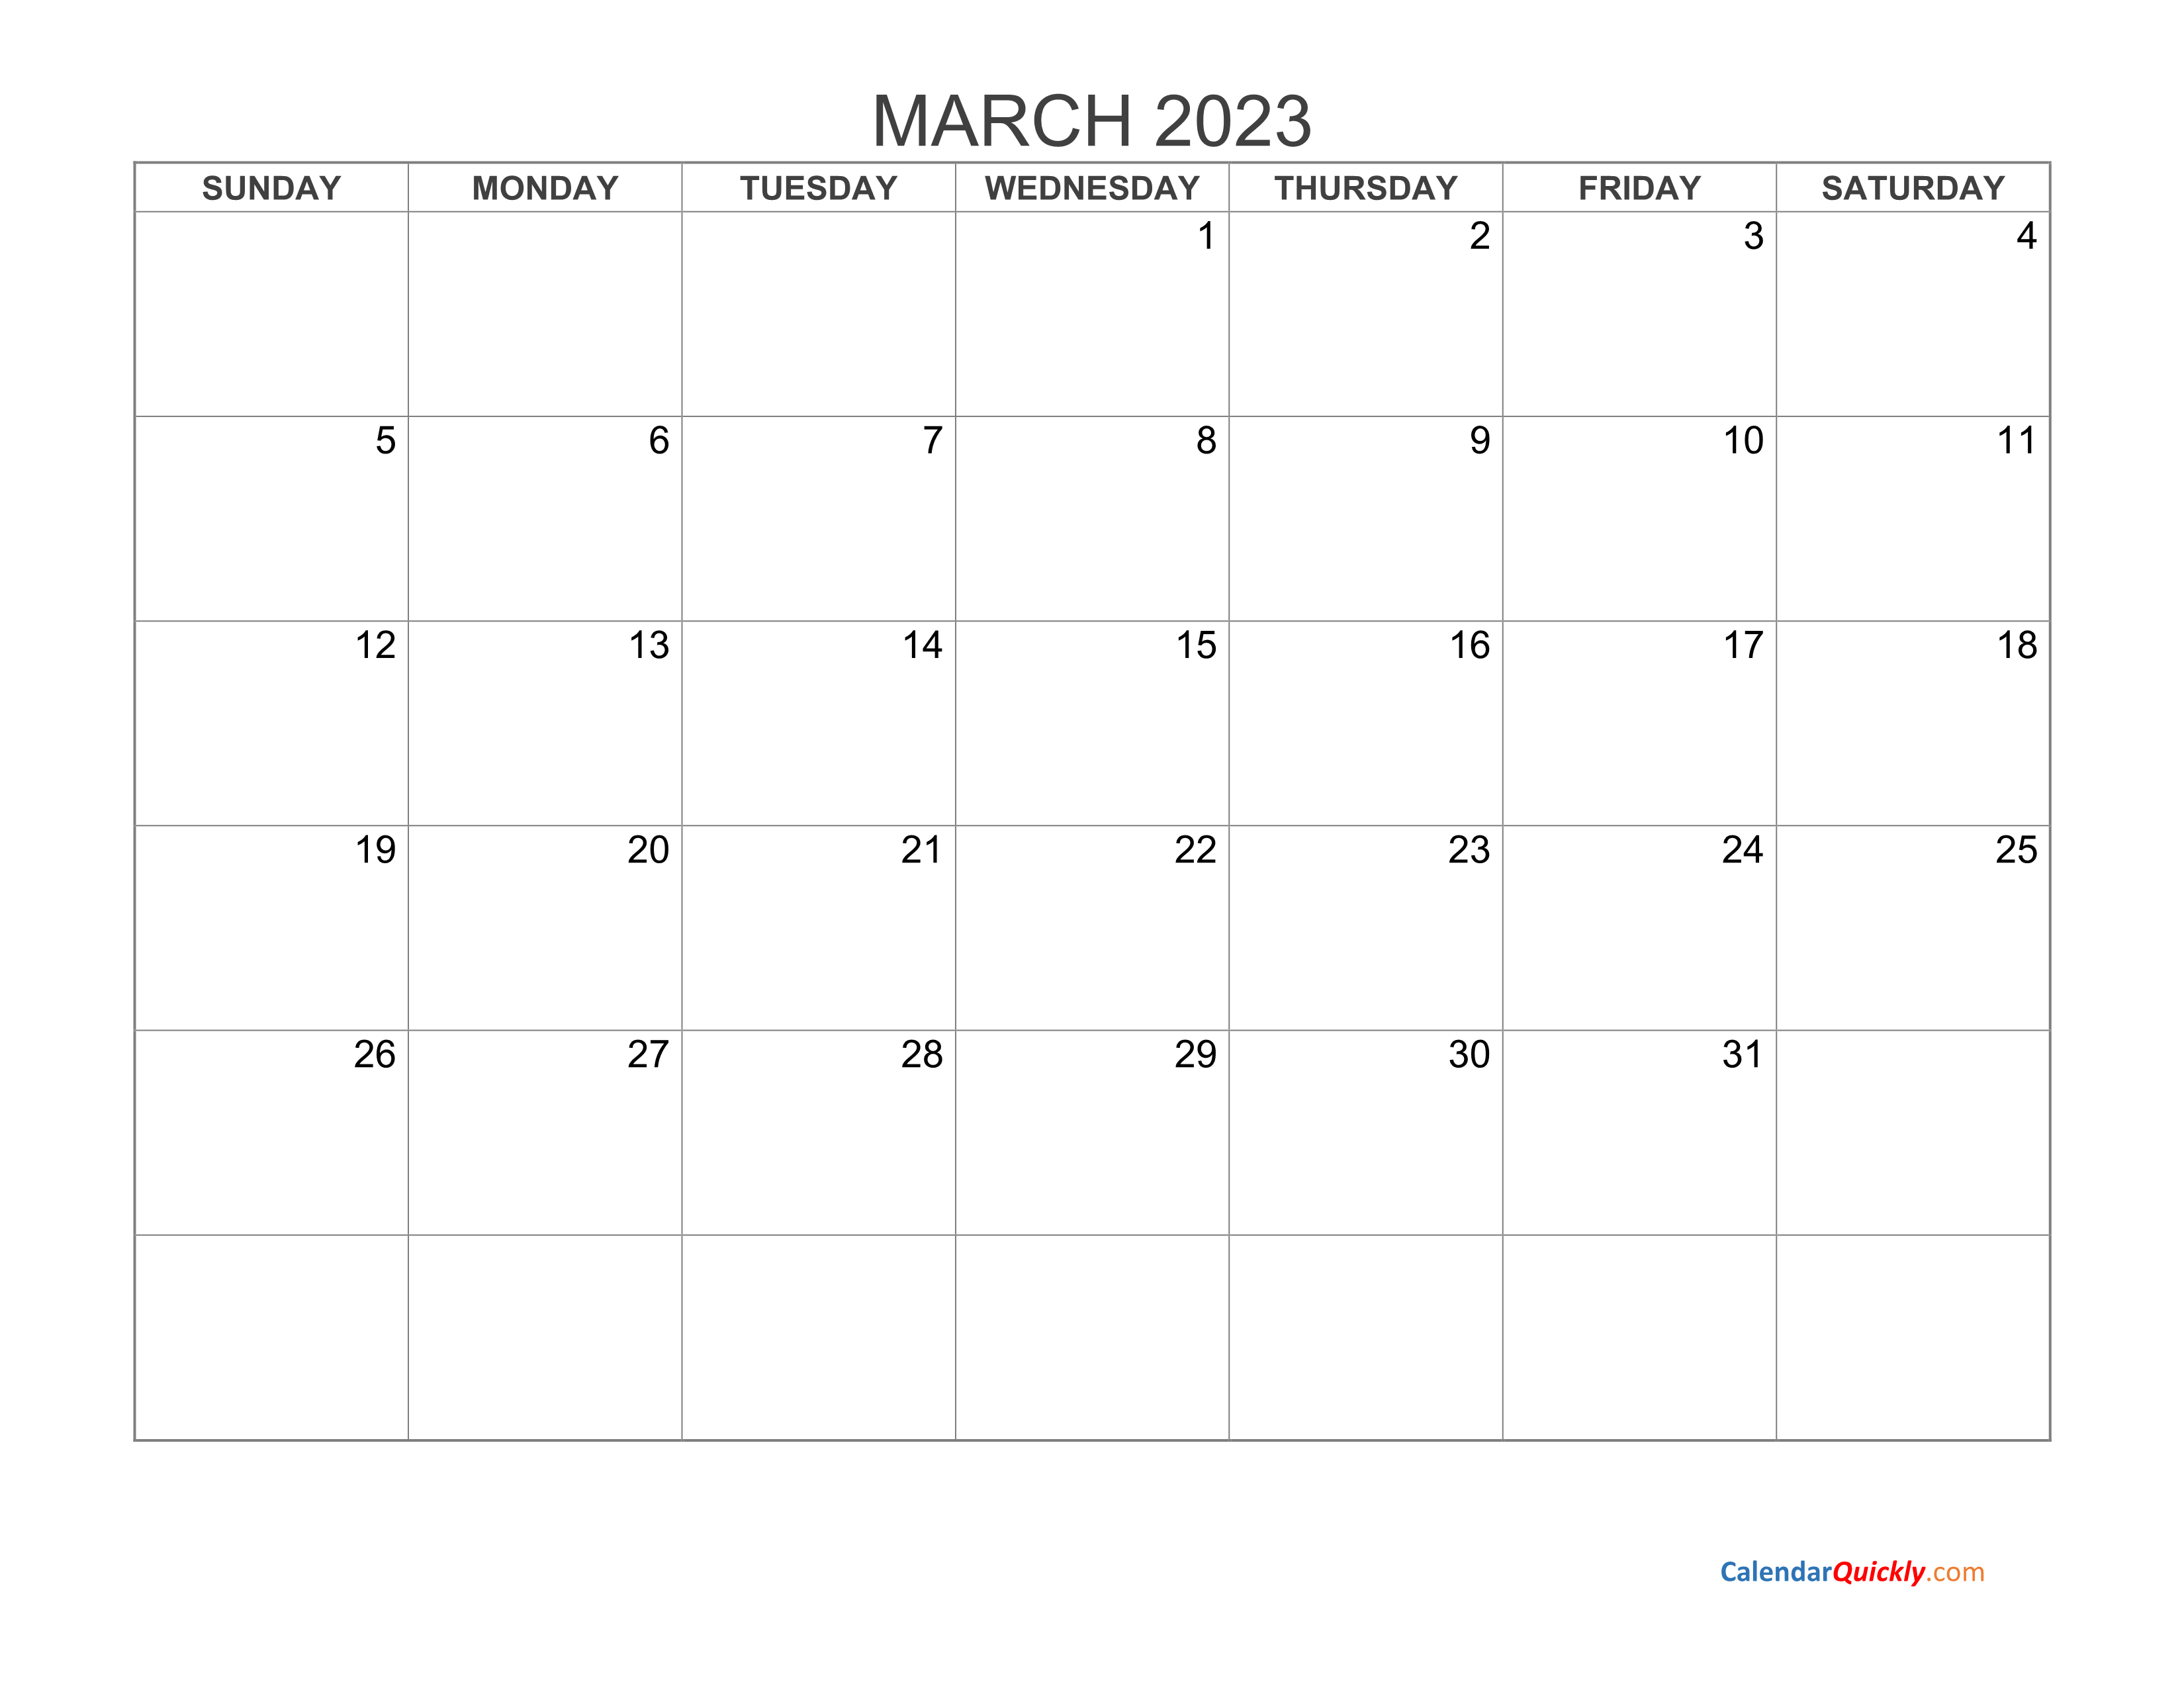 March 2023 Blank Calendar Calendar Quickly